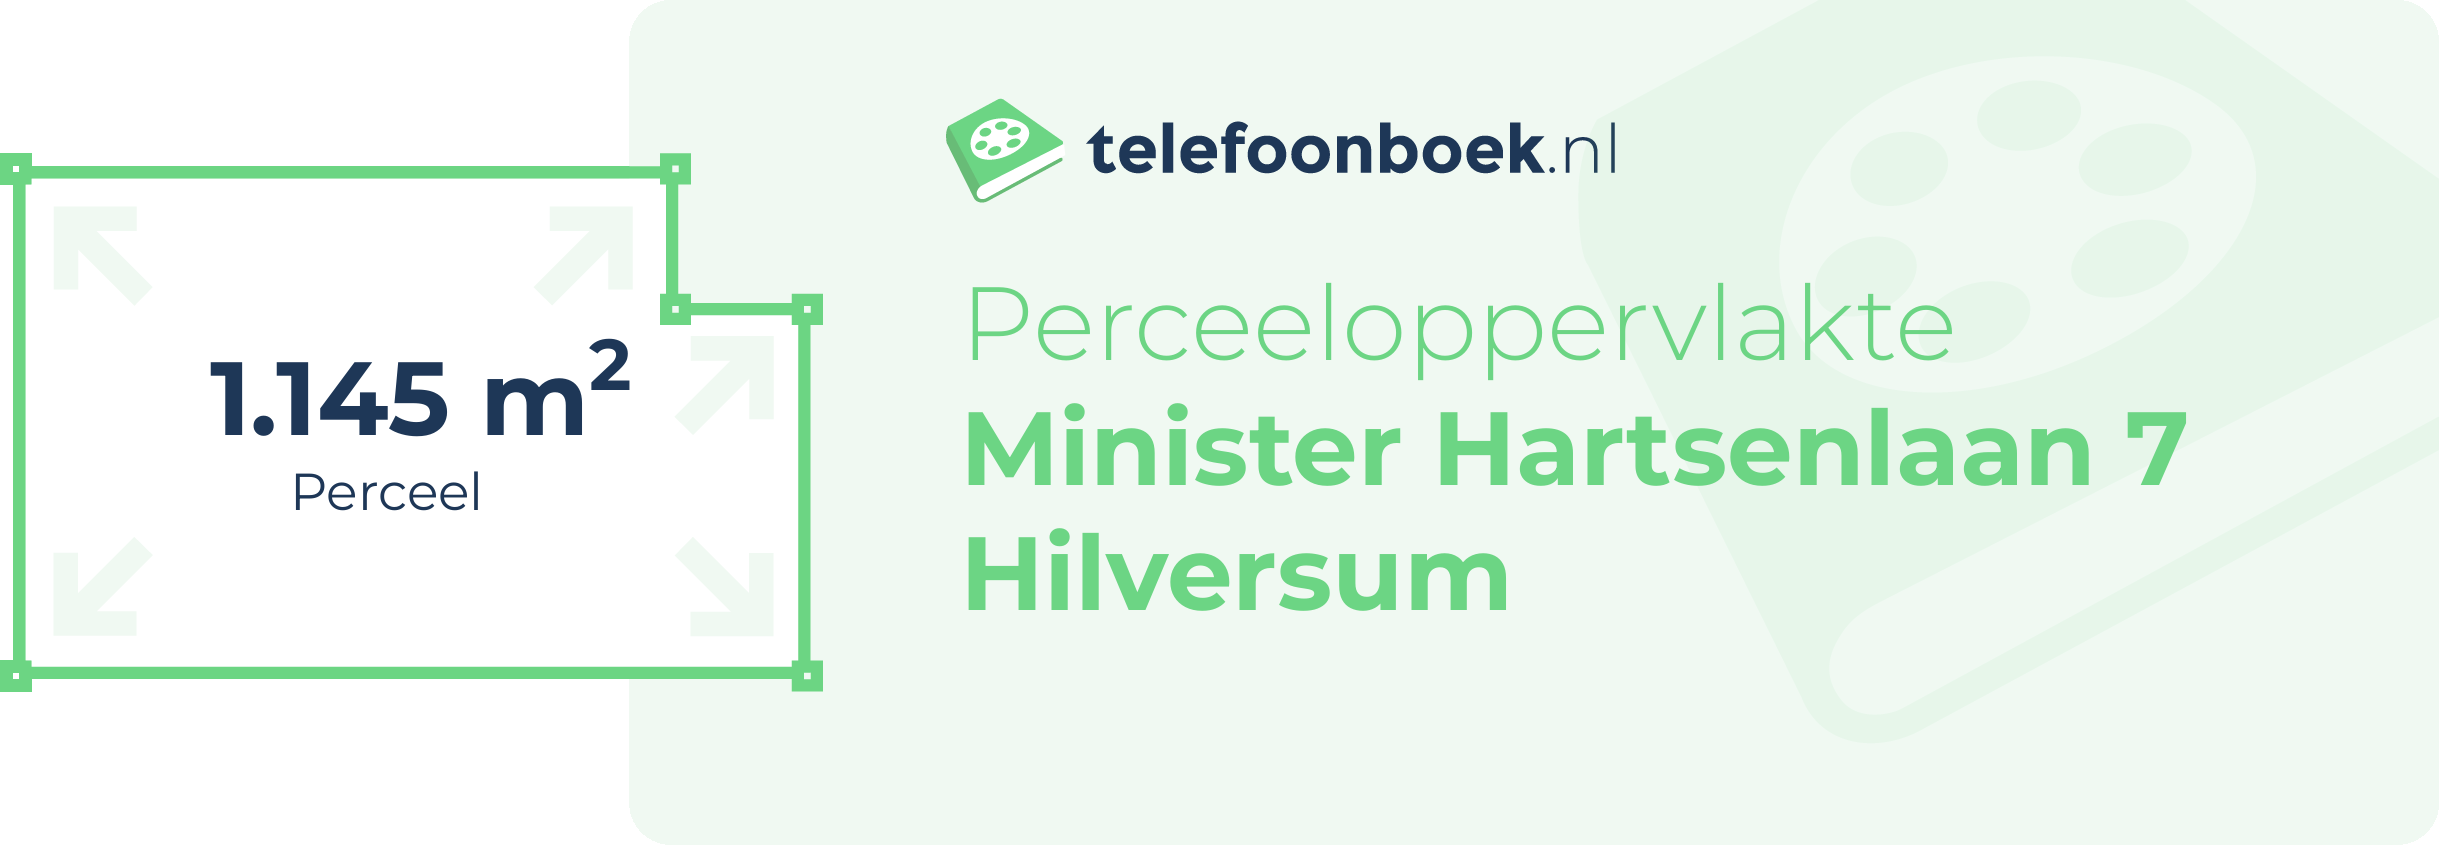 Perceeloppervlakte Minister Hartsenlaan 7 Hilversum